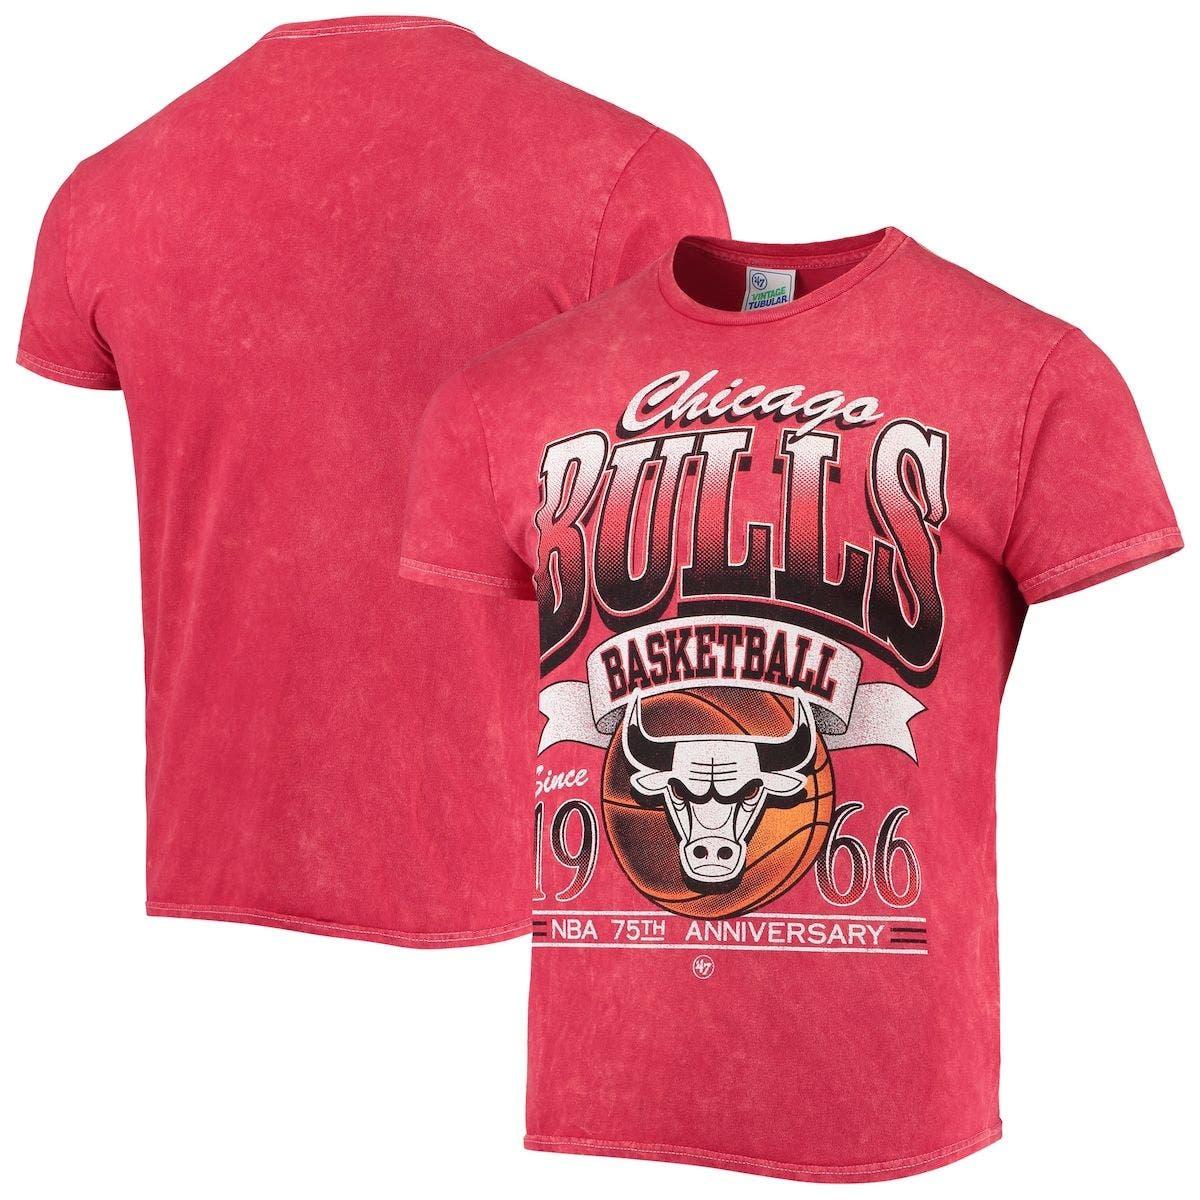 pink bulls shirt